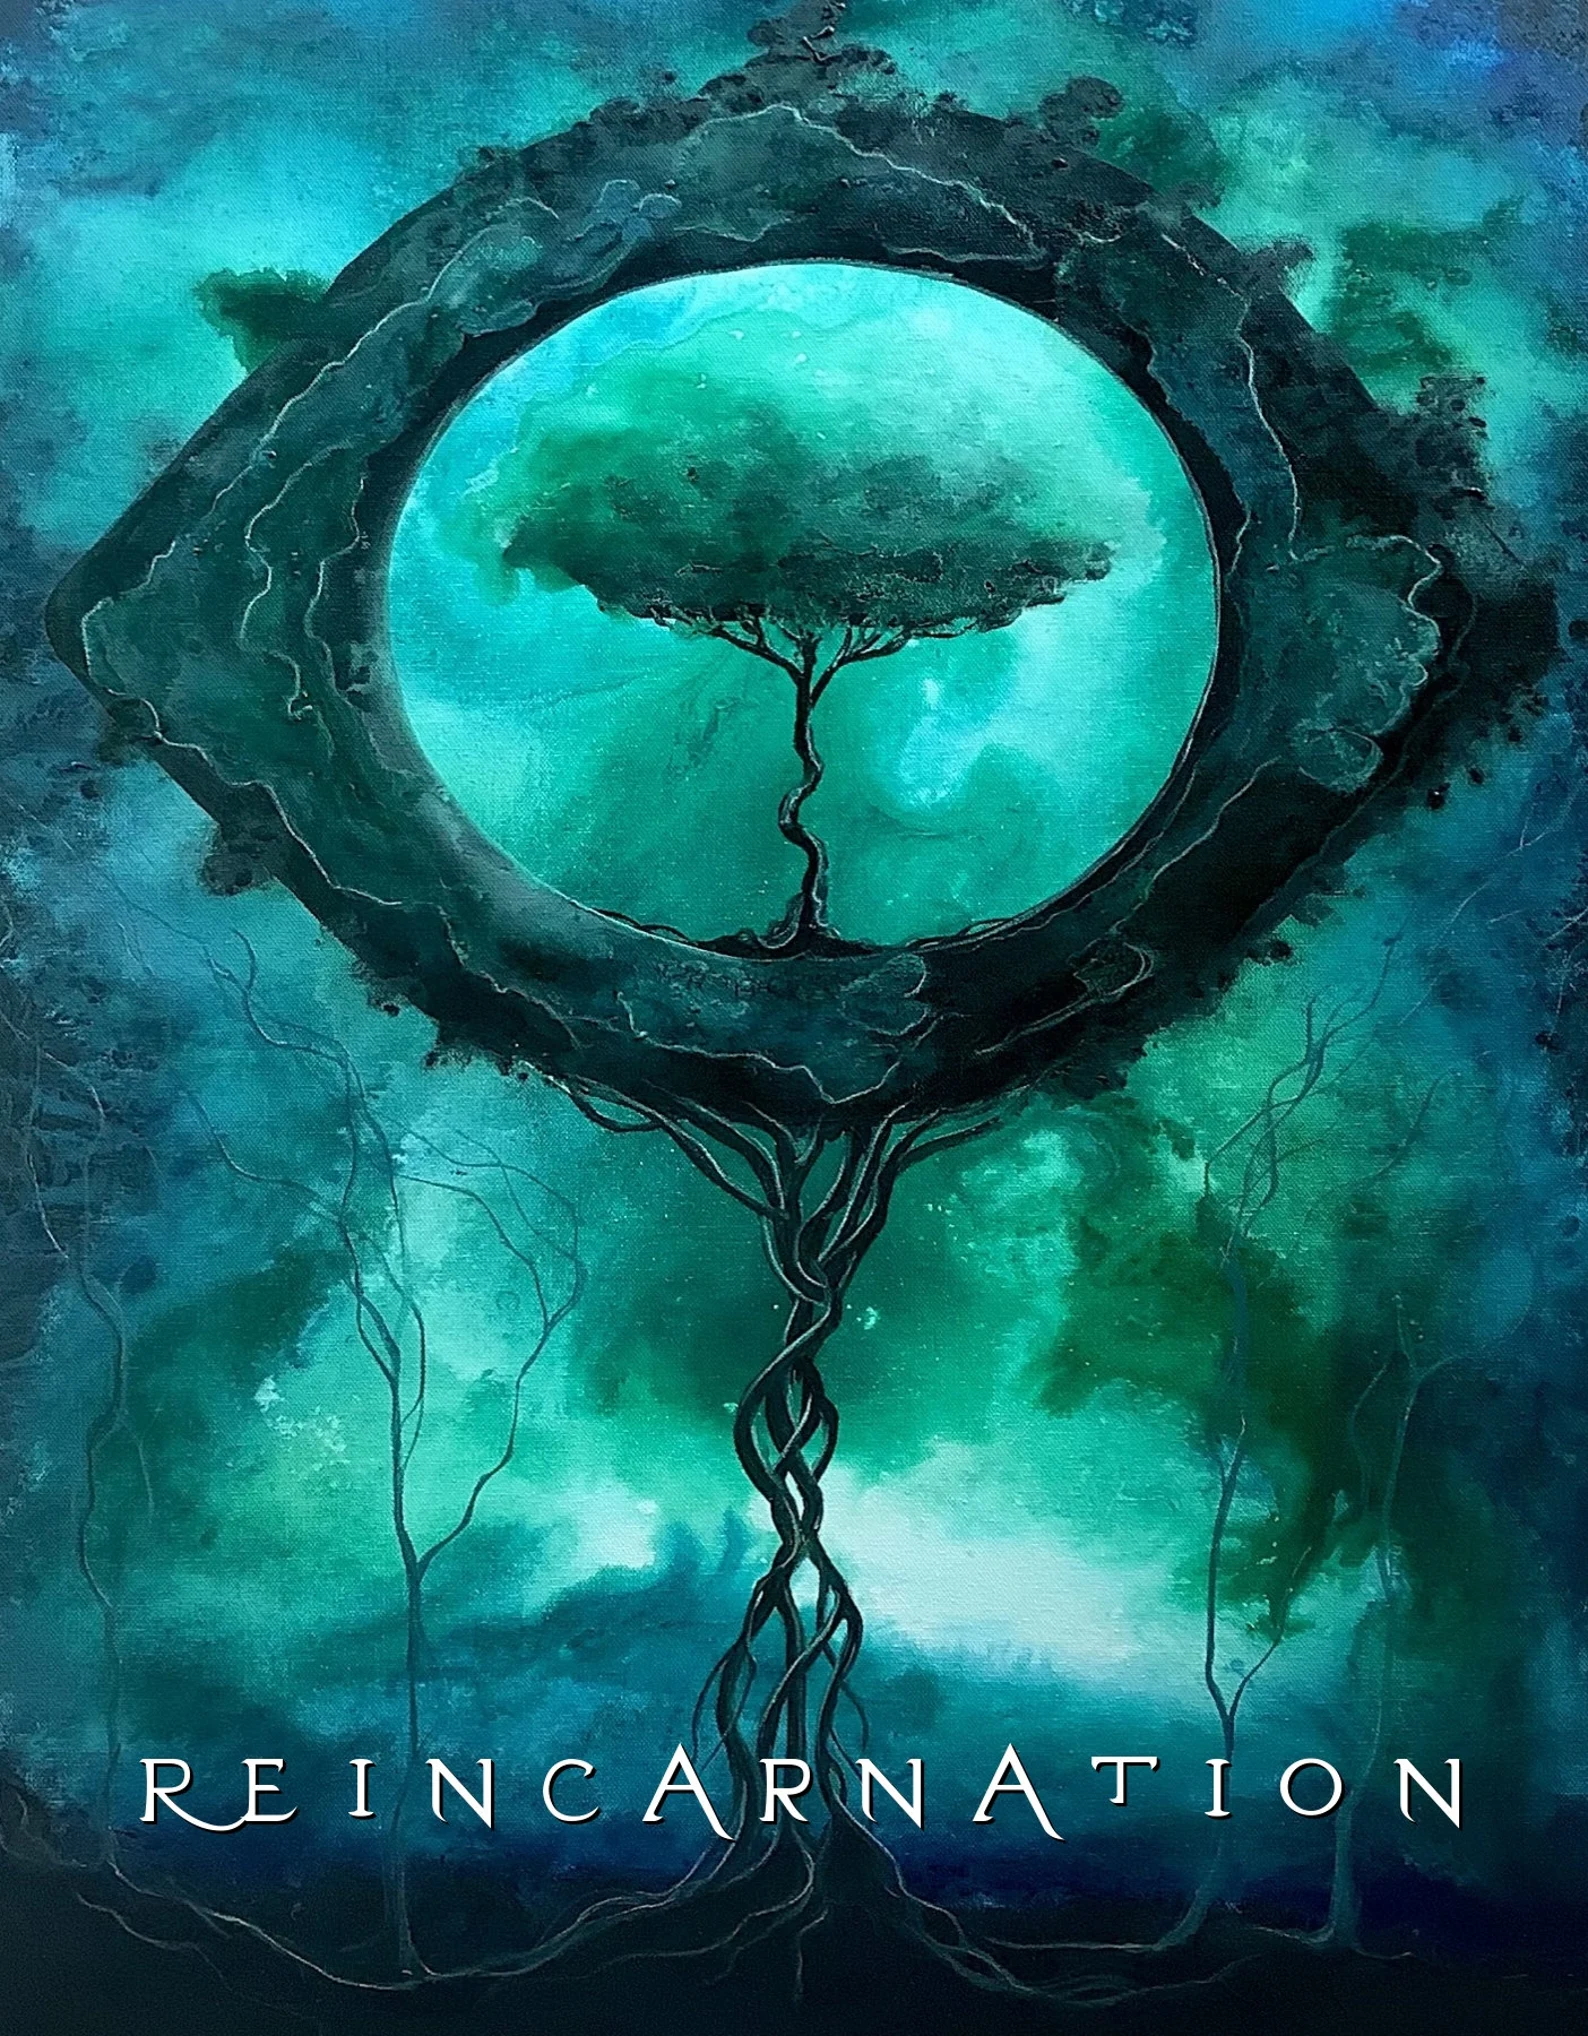 2. Reincarnation